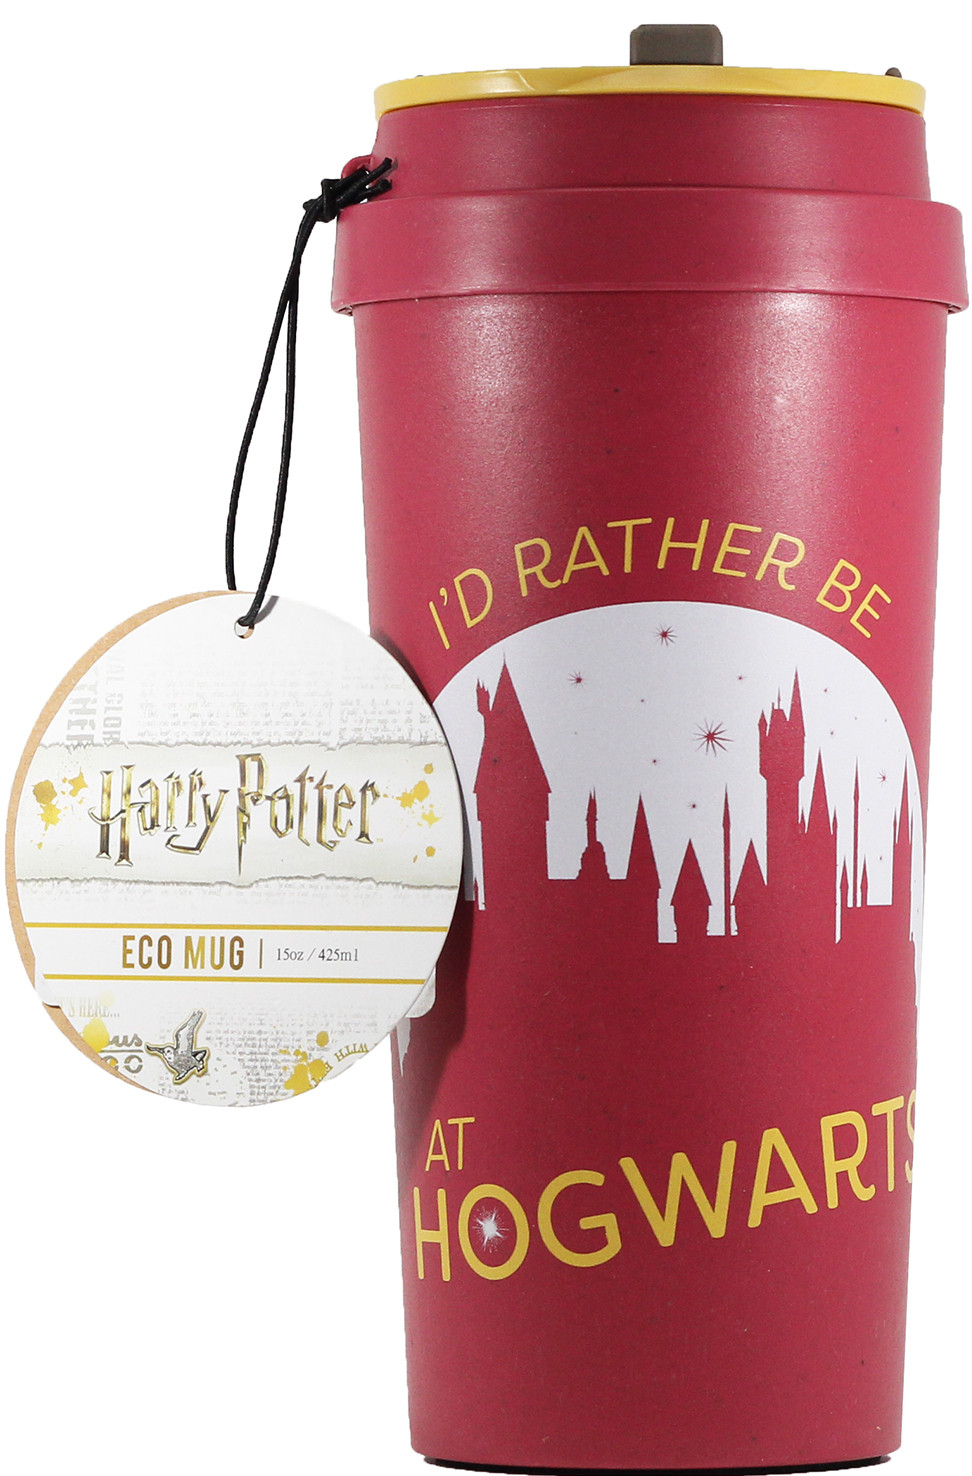 - Harry Potter: Rather Be At Hogwarts Eco 